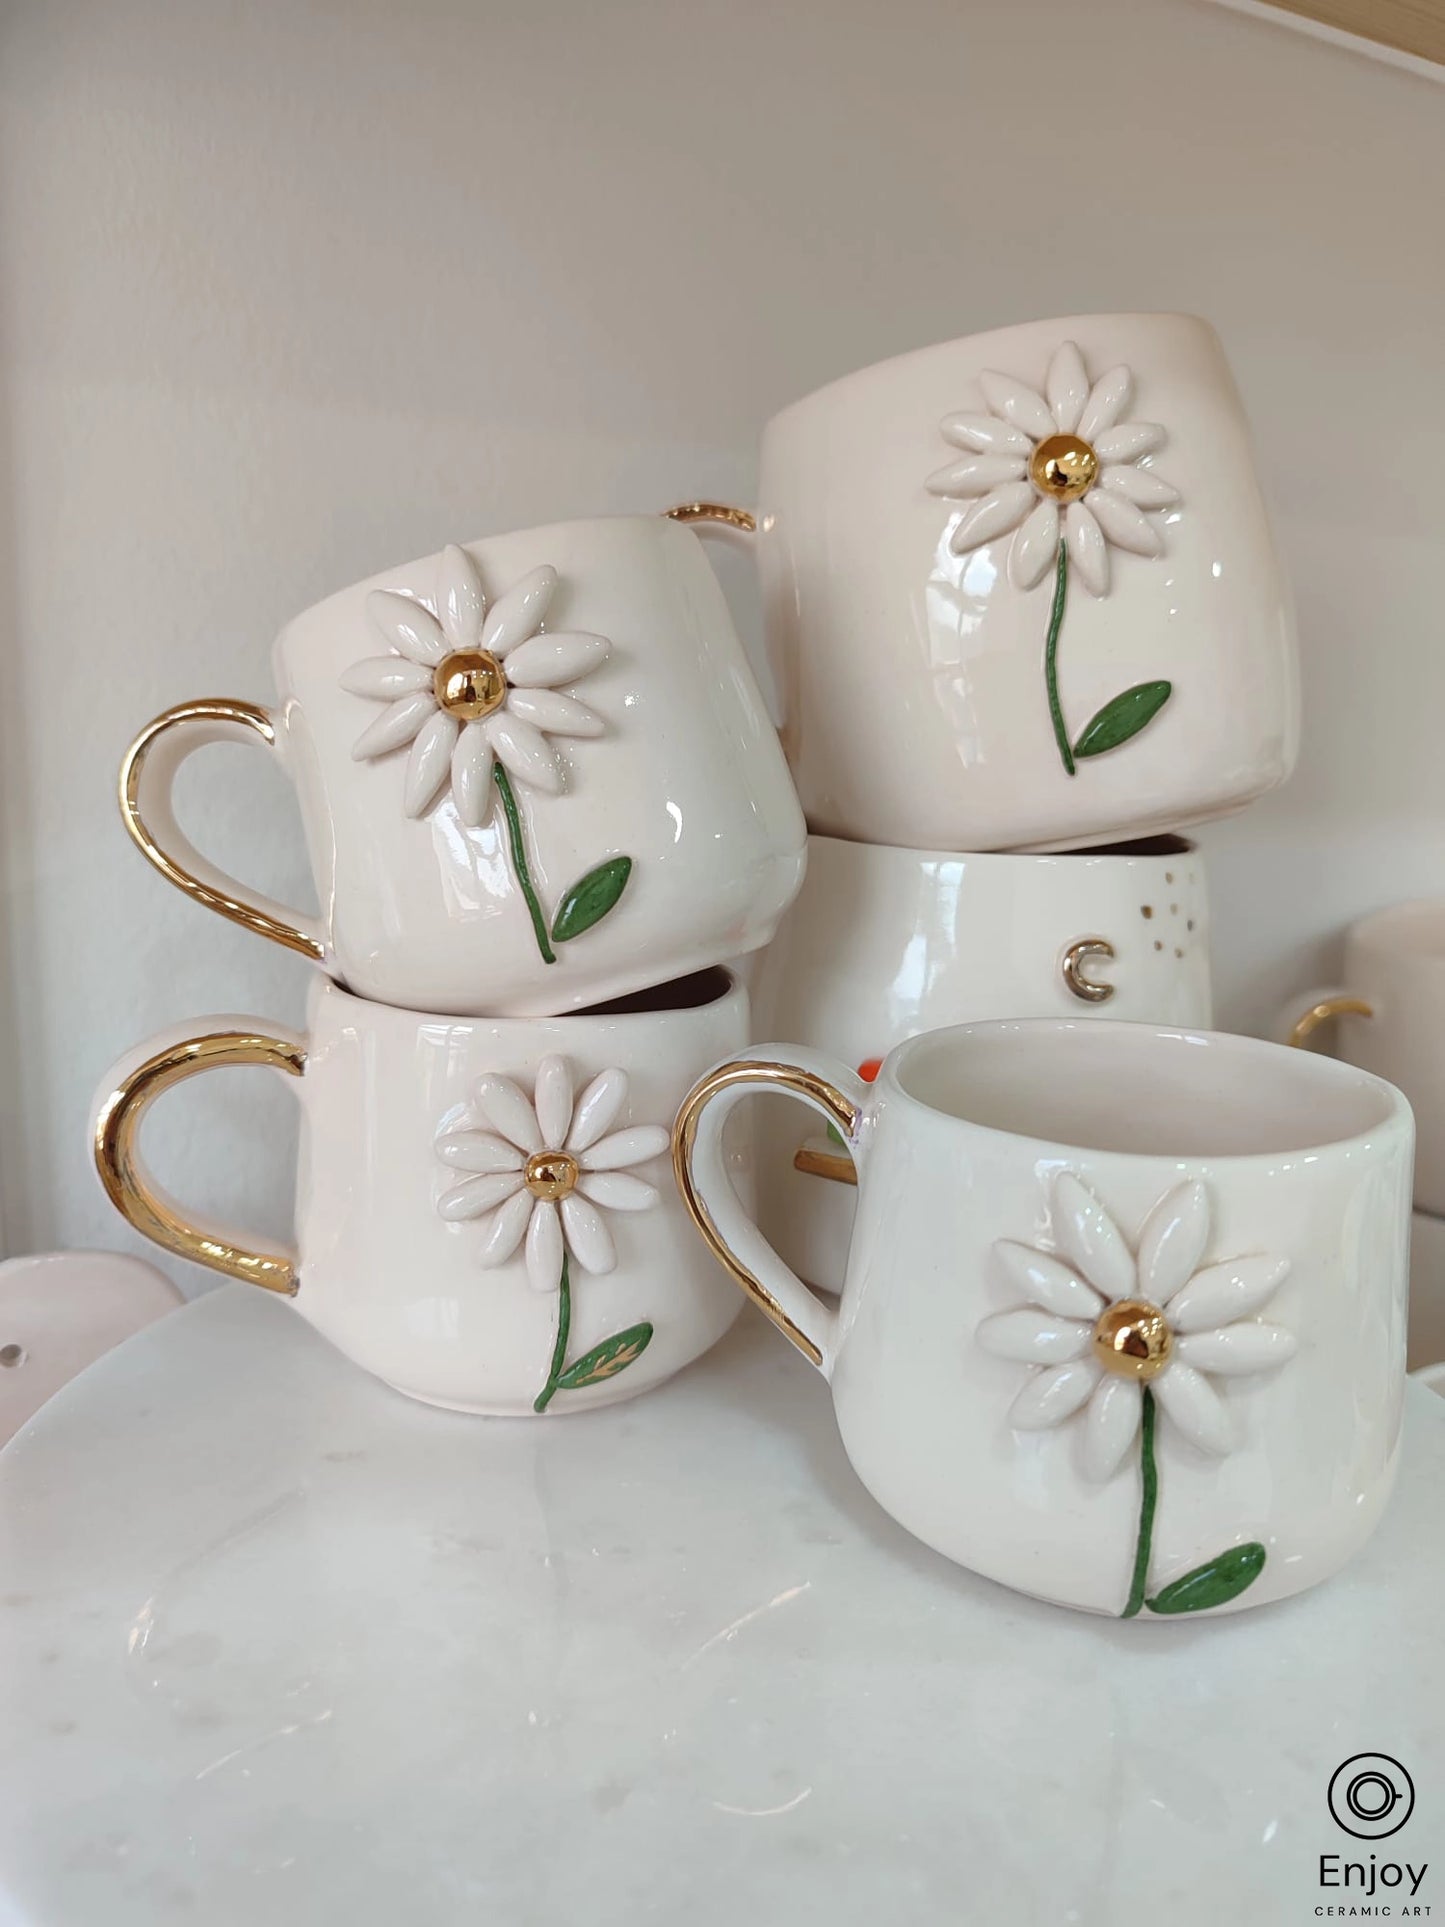 Daisy Delight: Handmade Ceramic Daisy Espresso Cup Set with Gold Handle & Saucer, 5.4 oz - Ideal Daisy Gift Set